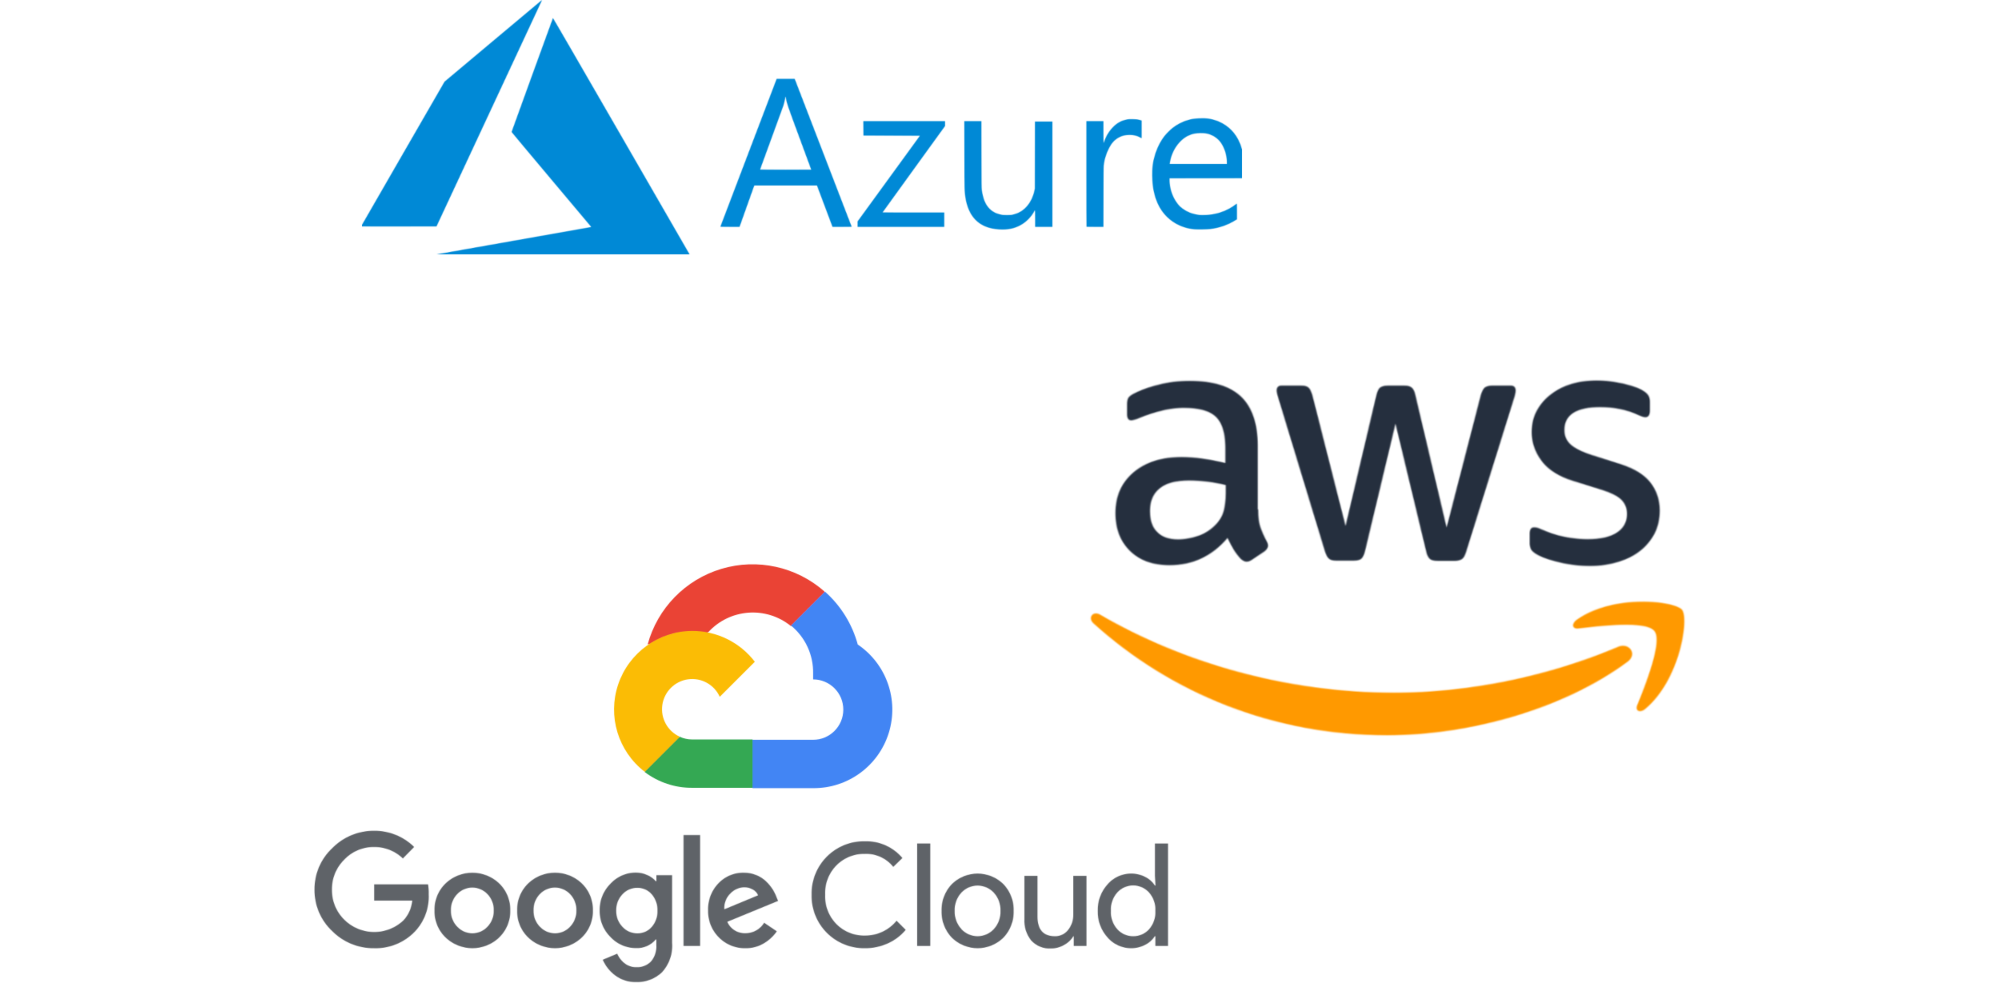 Azure Aws and Google cloud storage